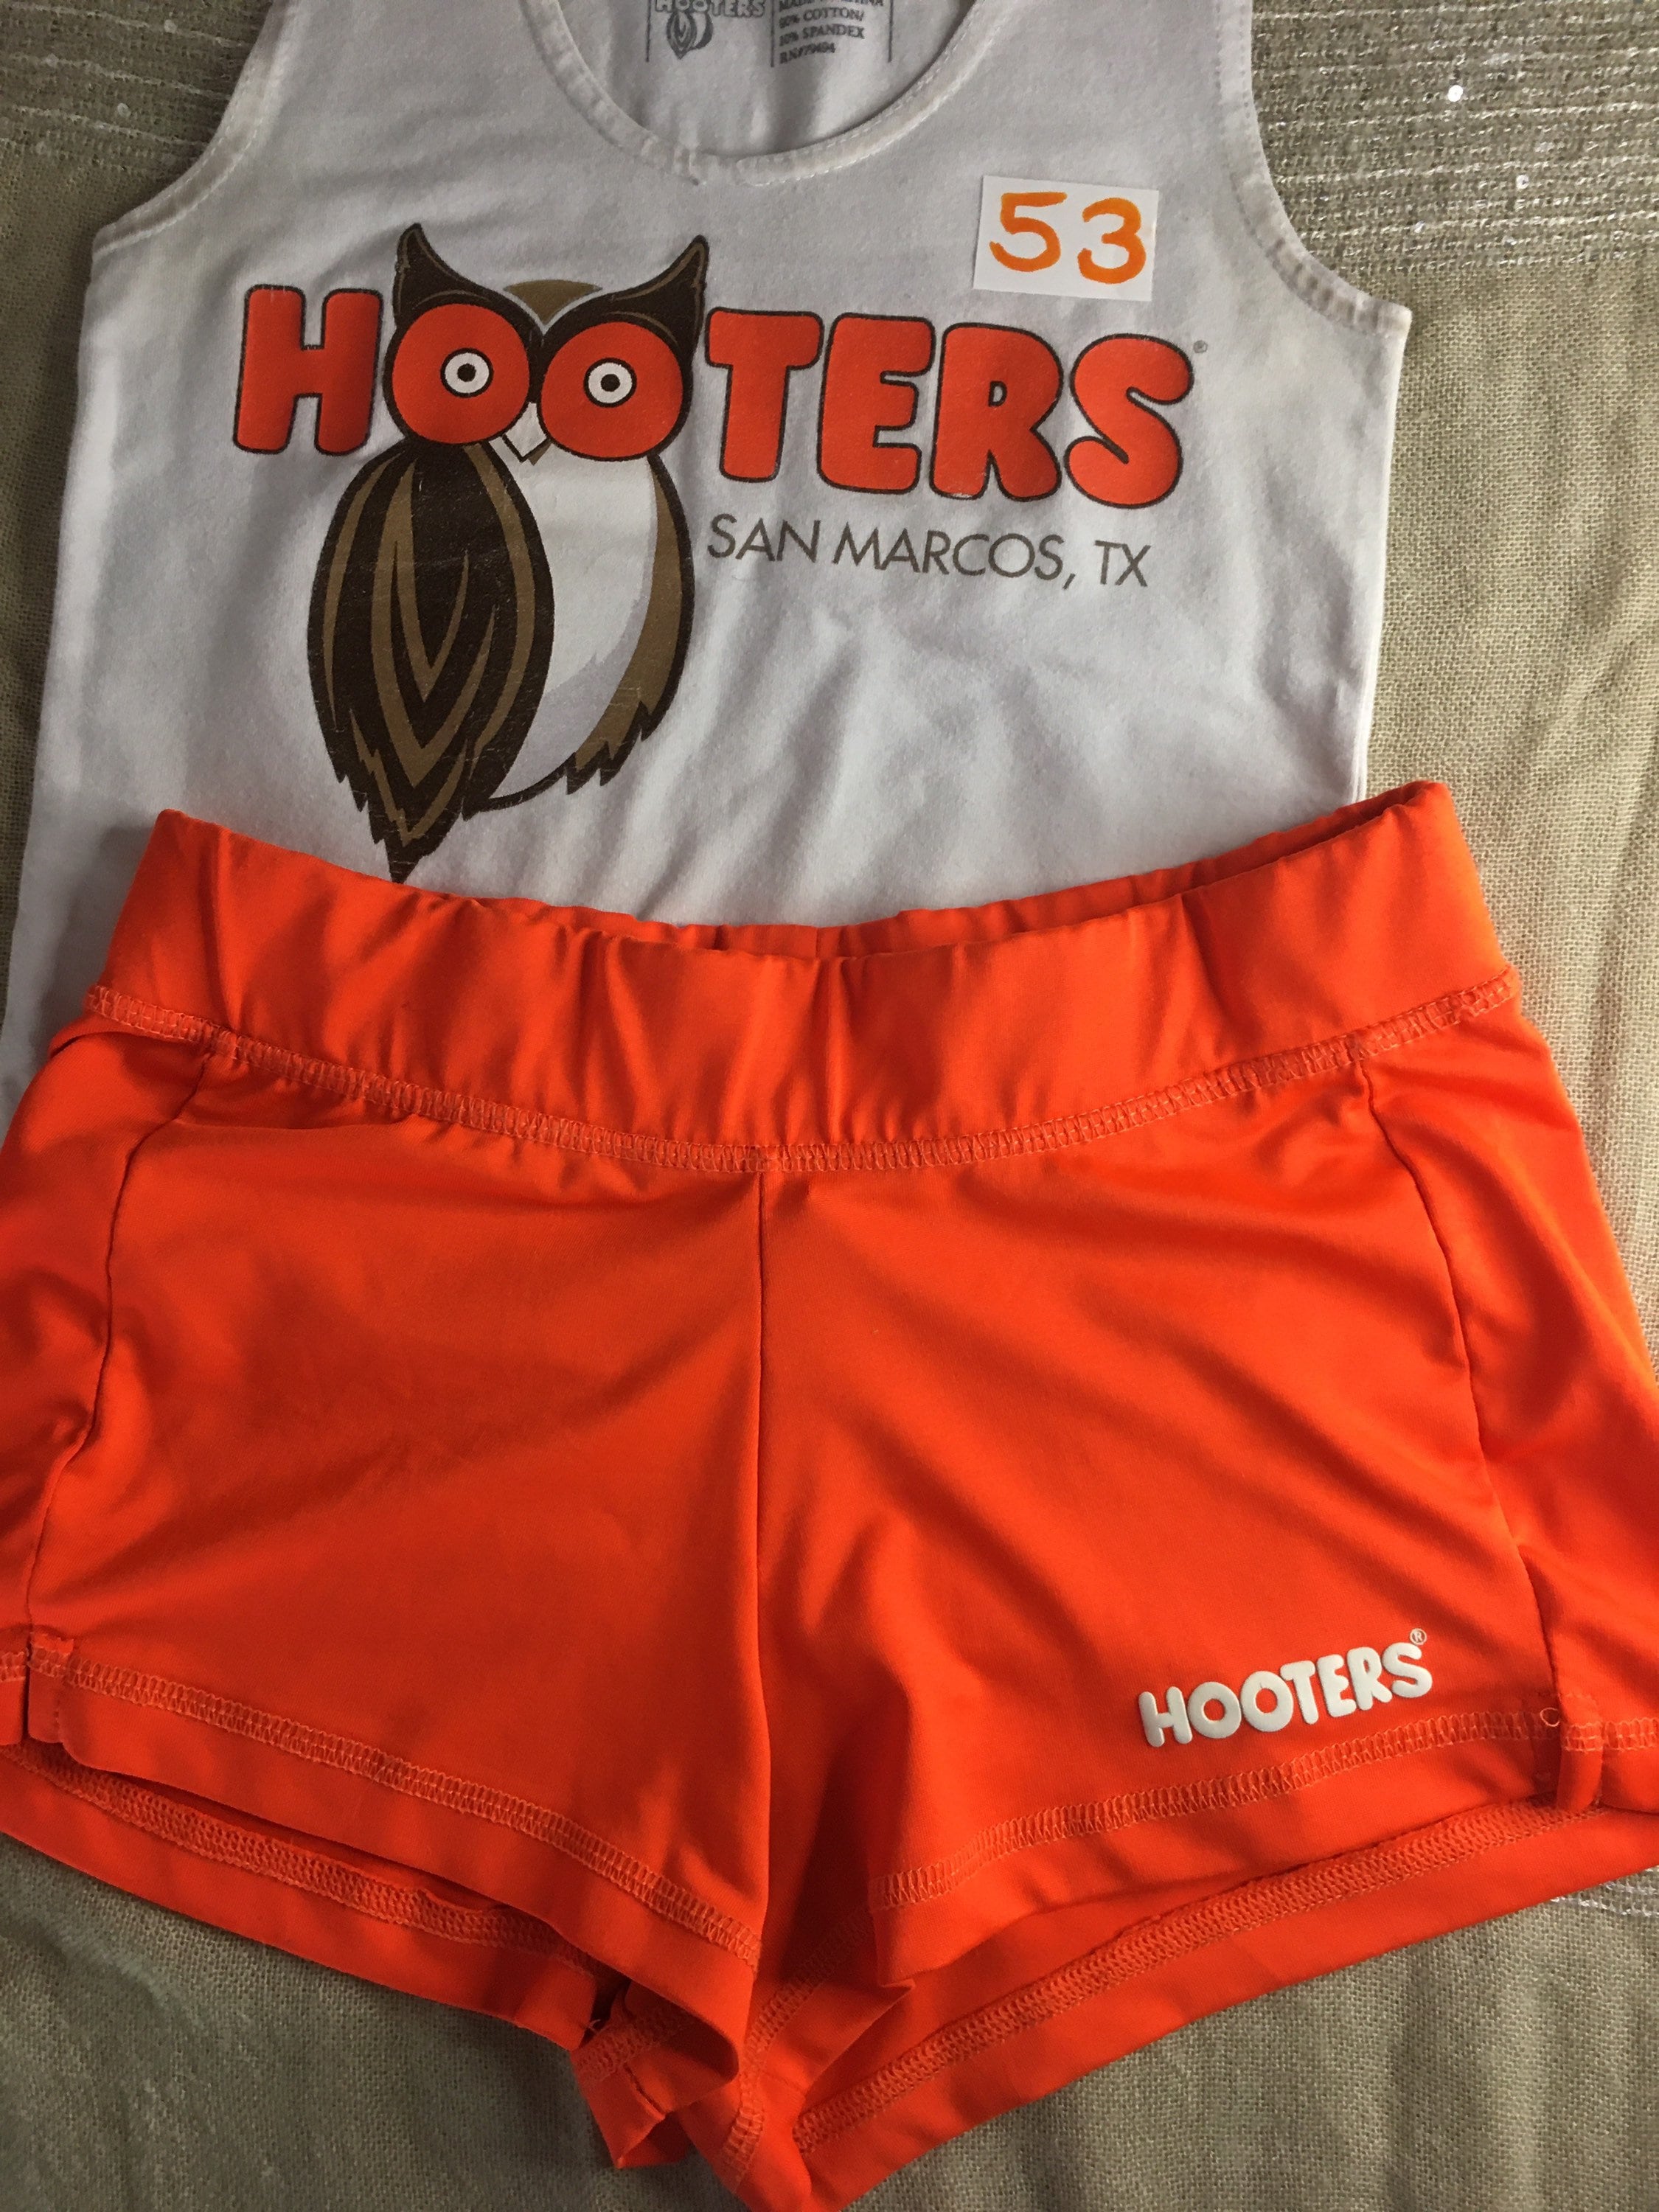 Box 26 53 Hooters Girl Worn Super Sexy Uniform Tank & Shorts From